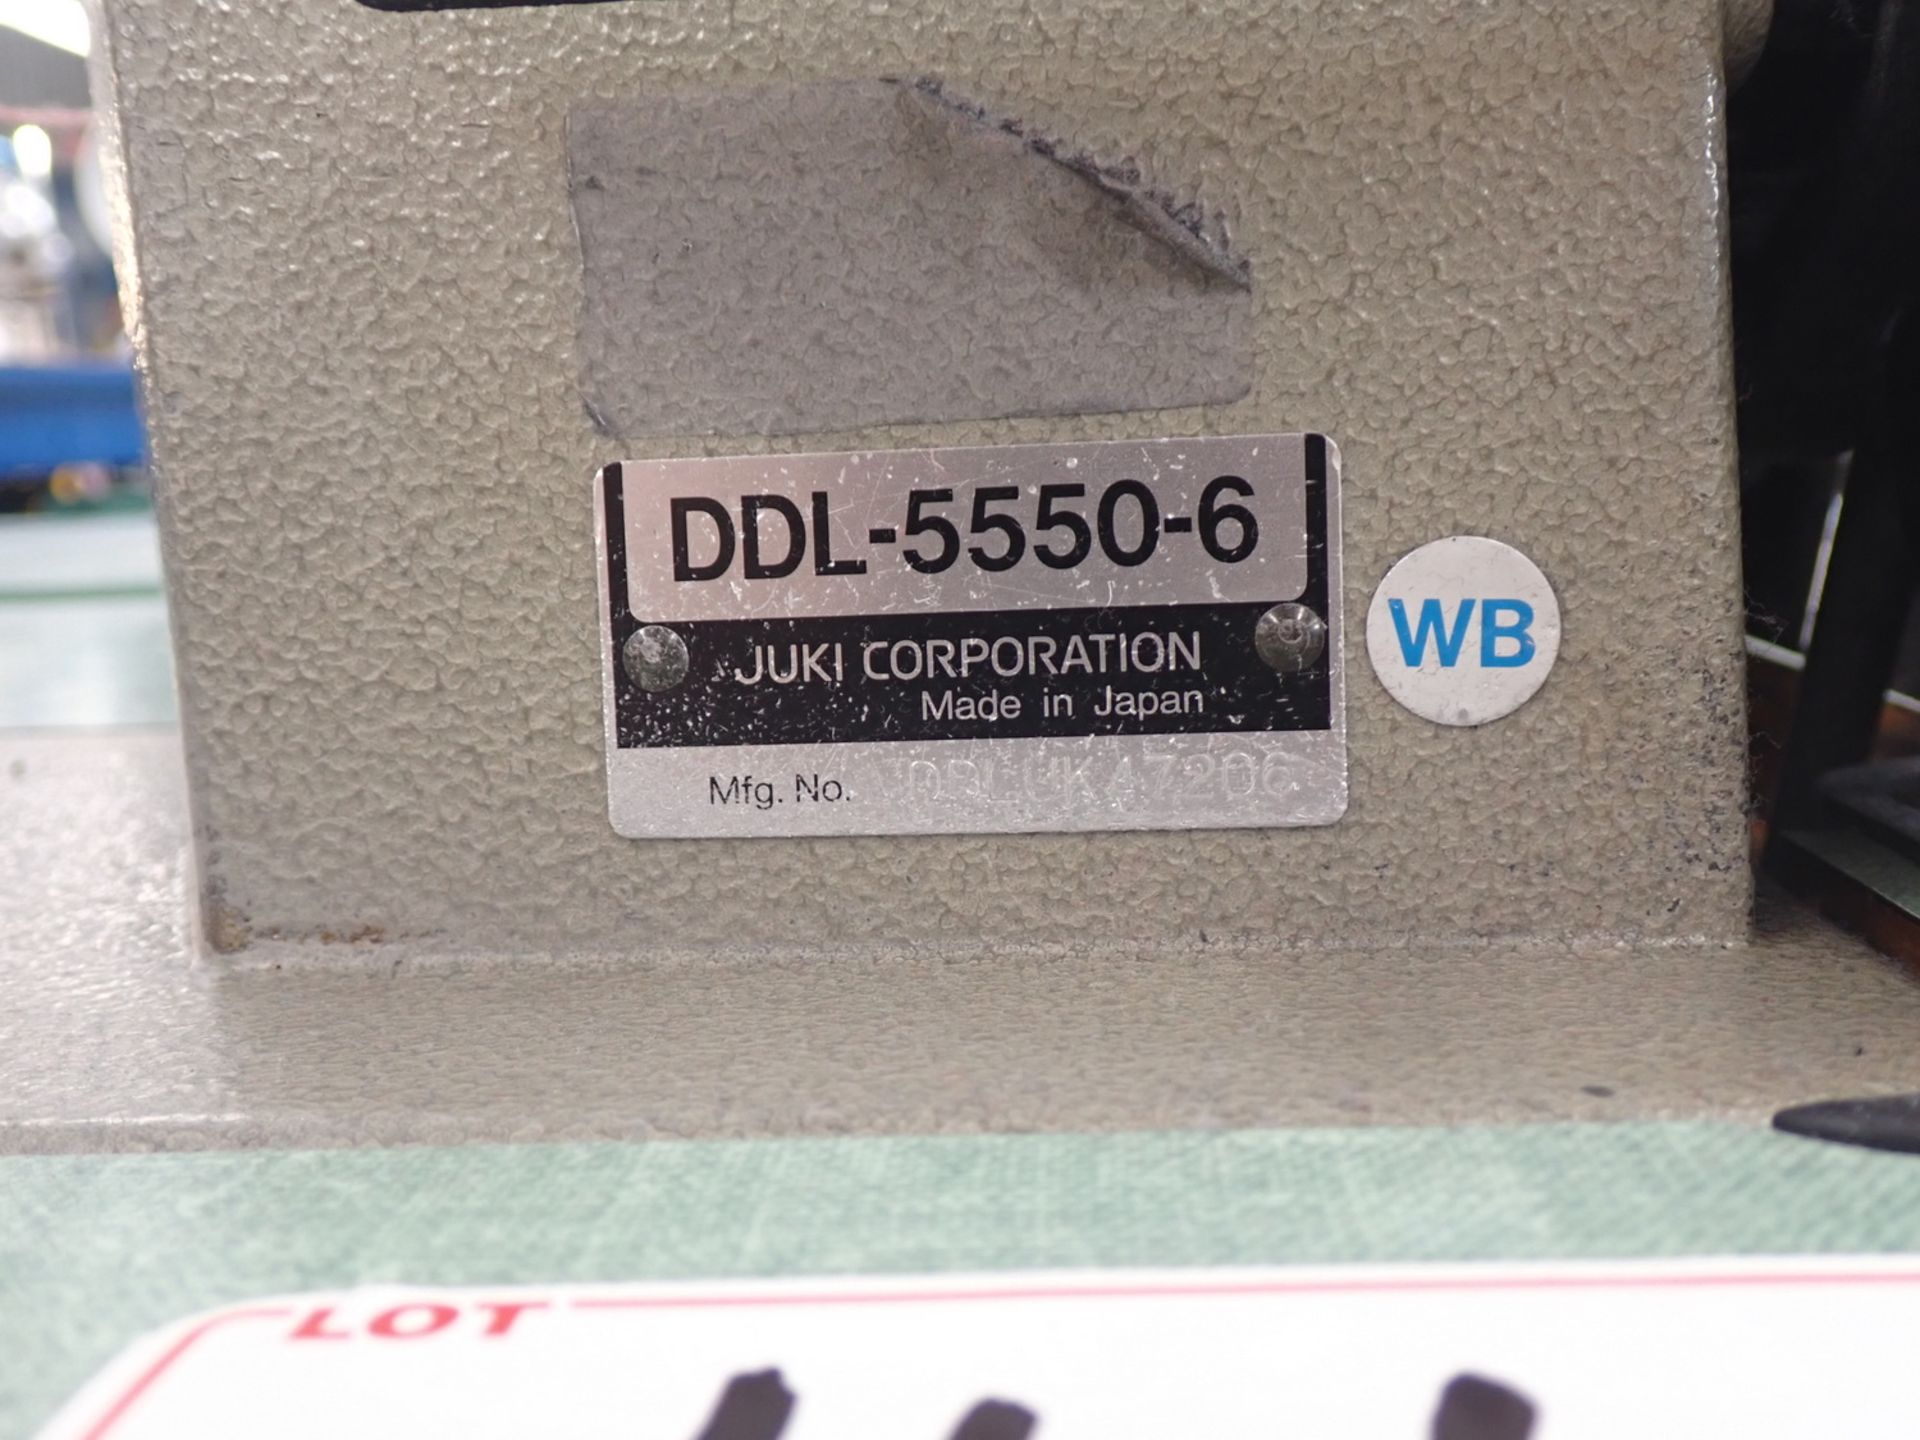 JUKI DDL-5550-6 SGLE NEEDLE MACHINE W/ SC120 CONTROLLER (220V) - Image 3 of 7